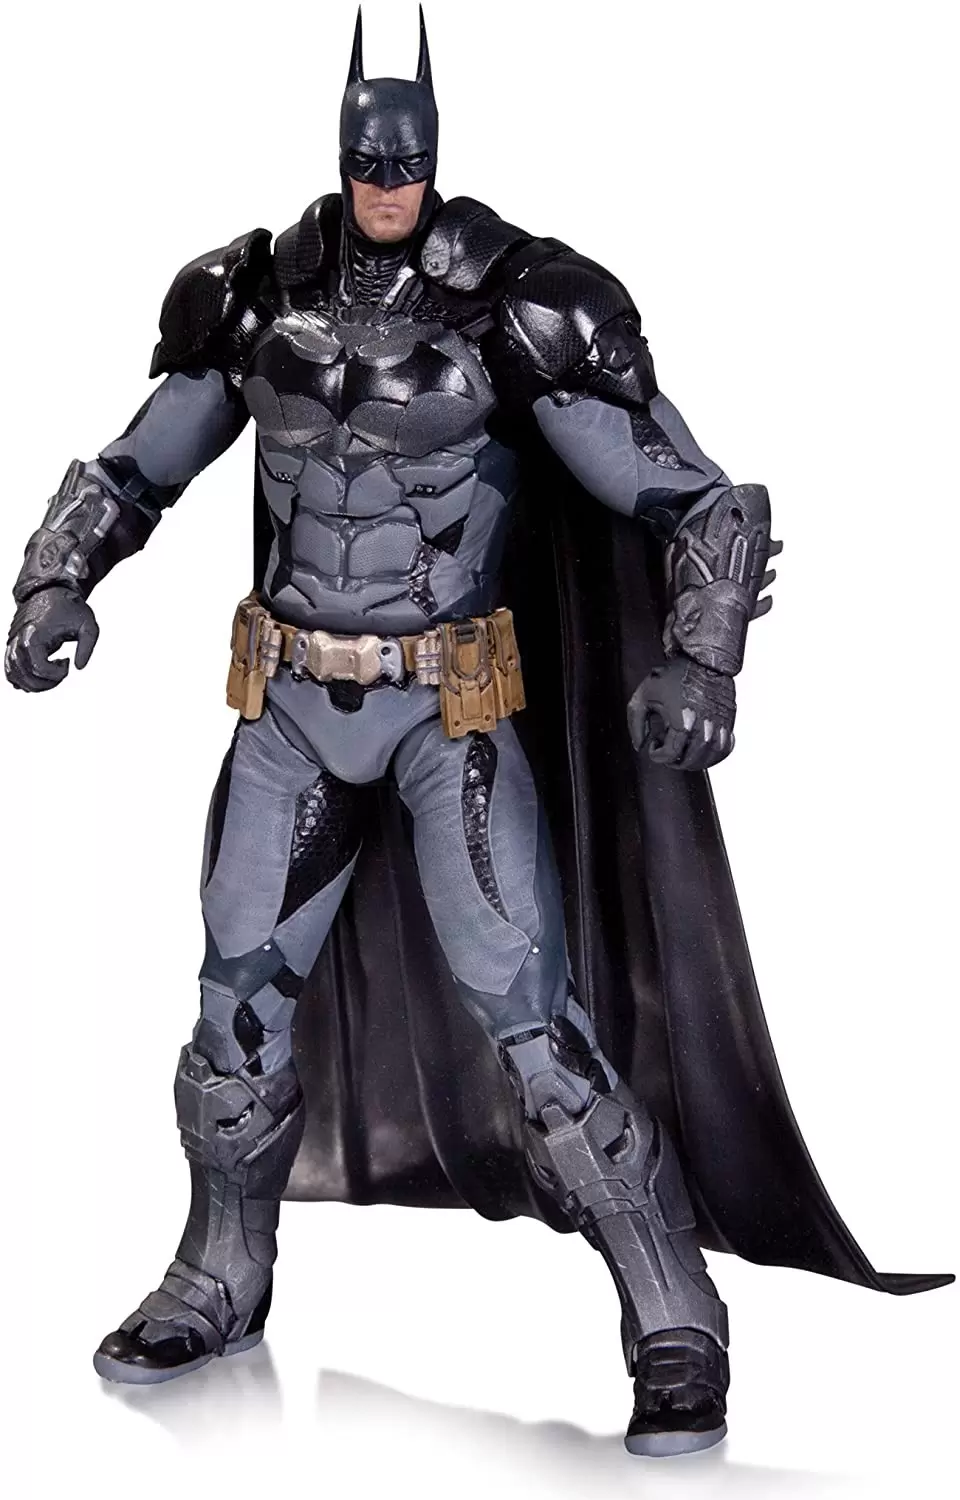 Batman Arkham Knight . Figuarts DC Comics action figure